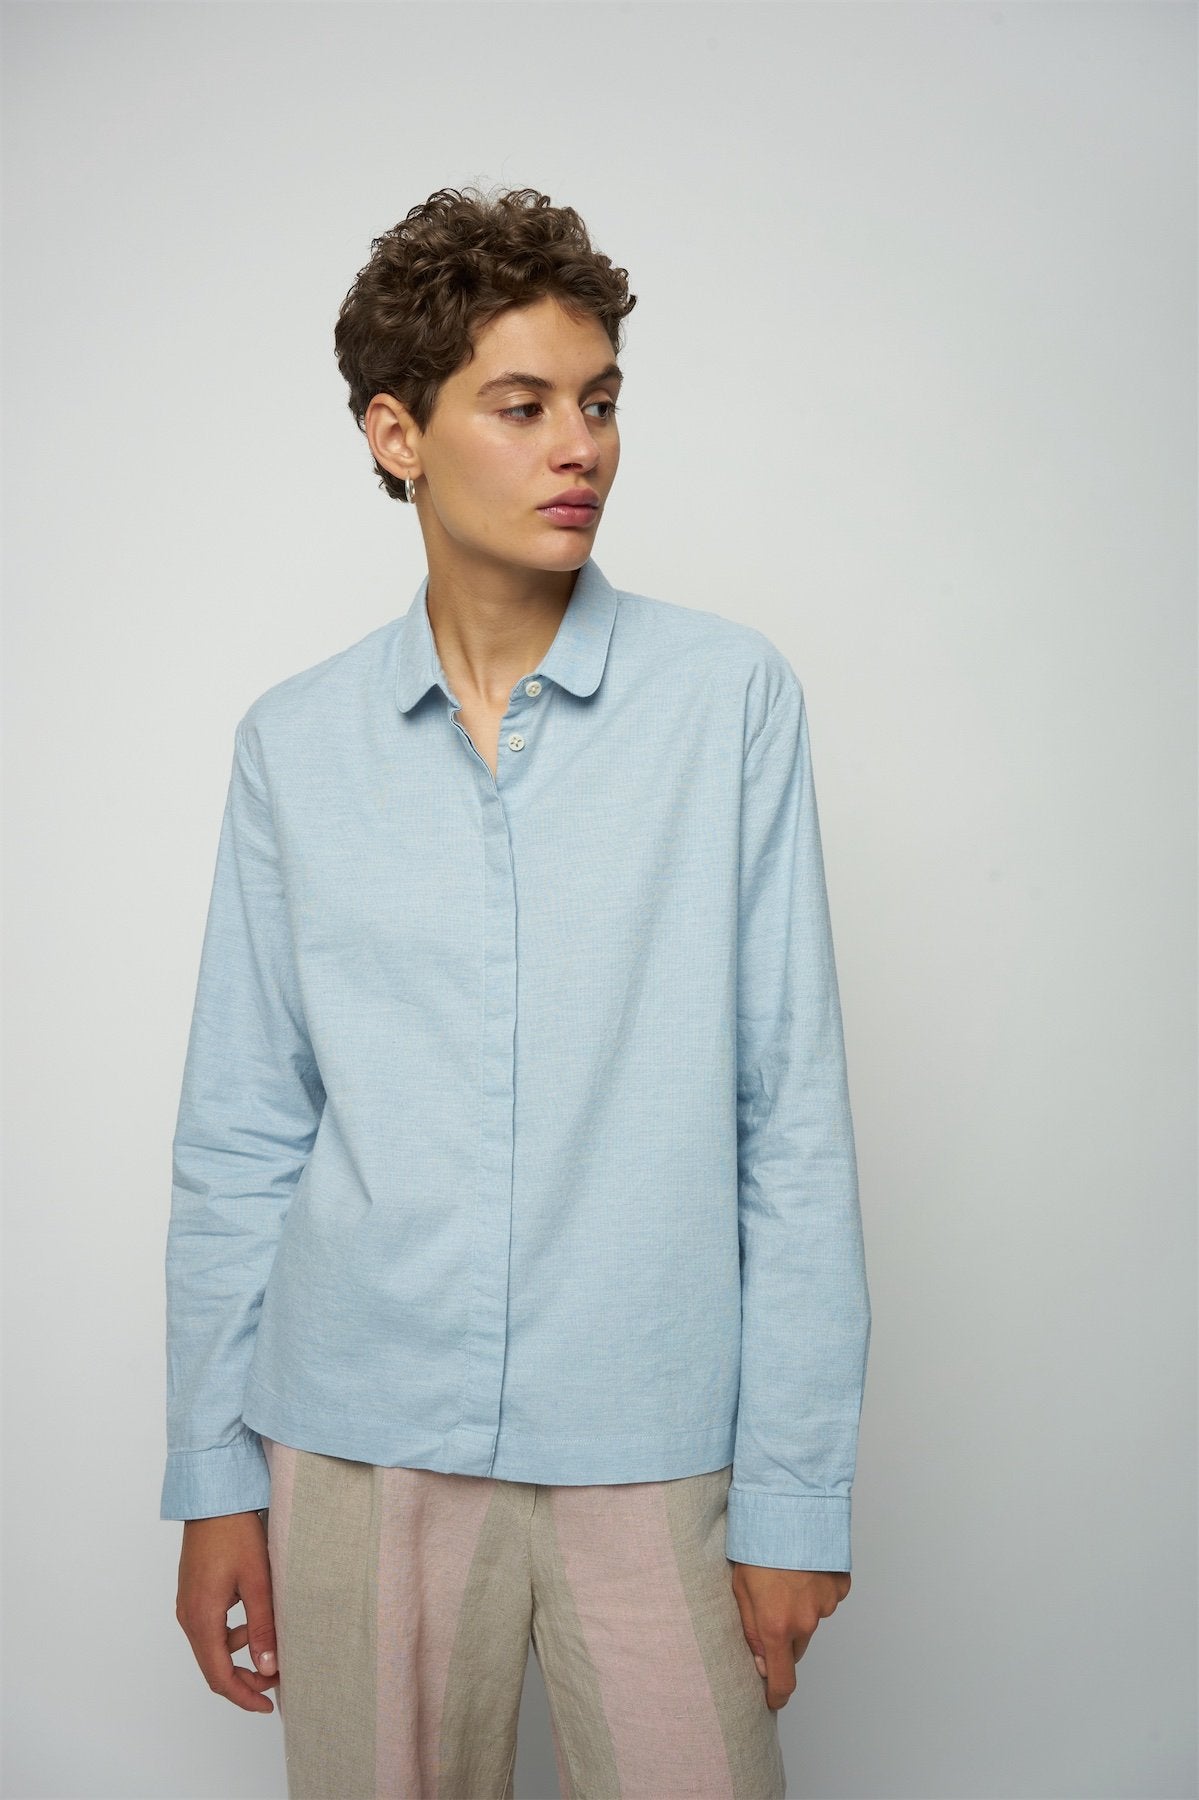 Cute Round Collar Shirt in a Light Blue Japanese Organic Oxford Cotton